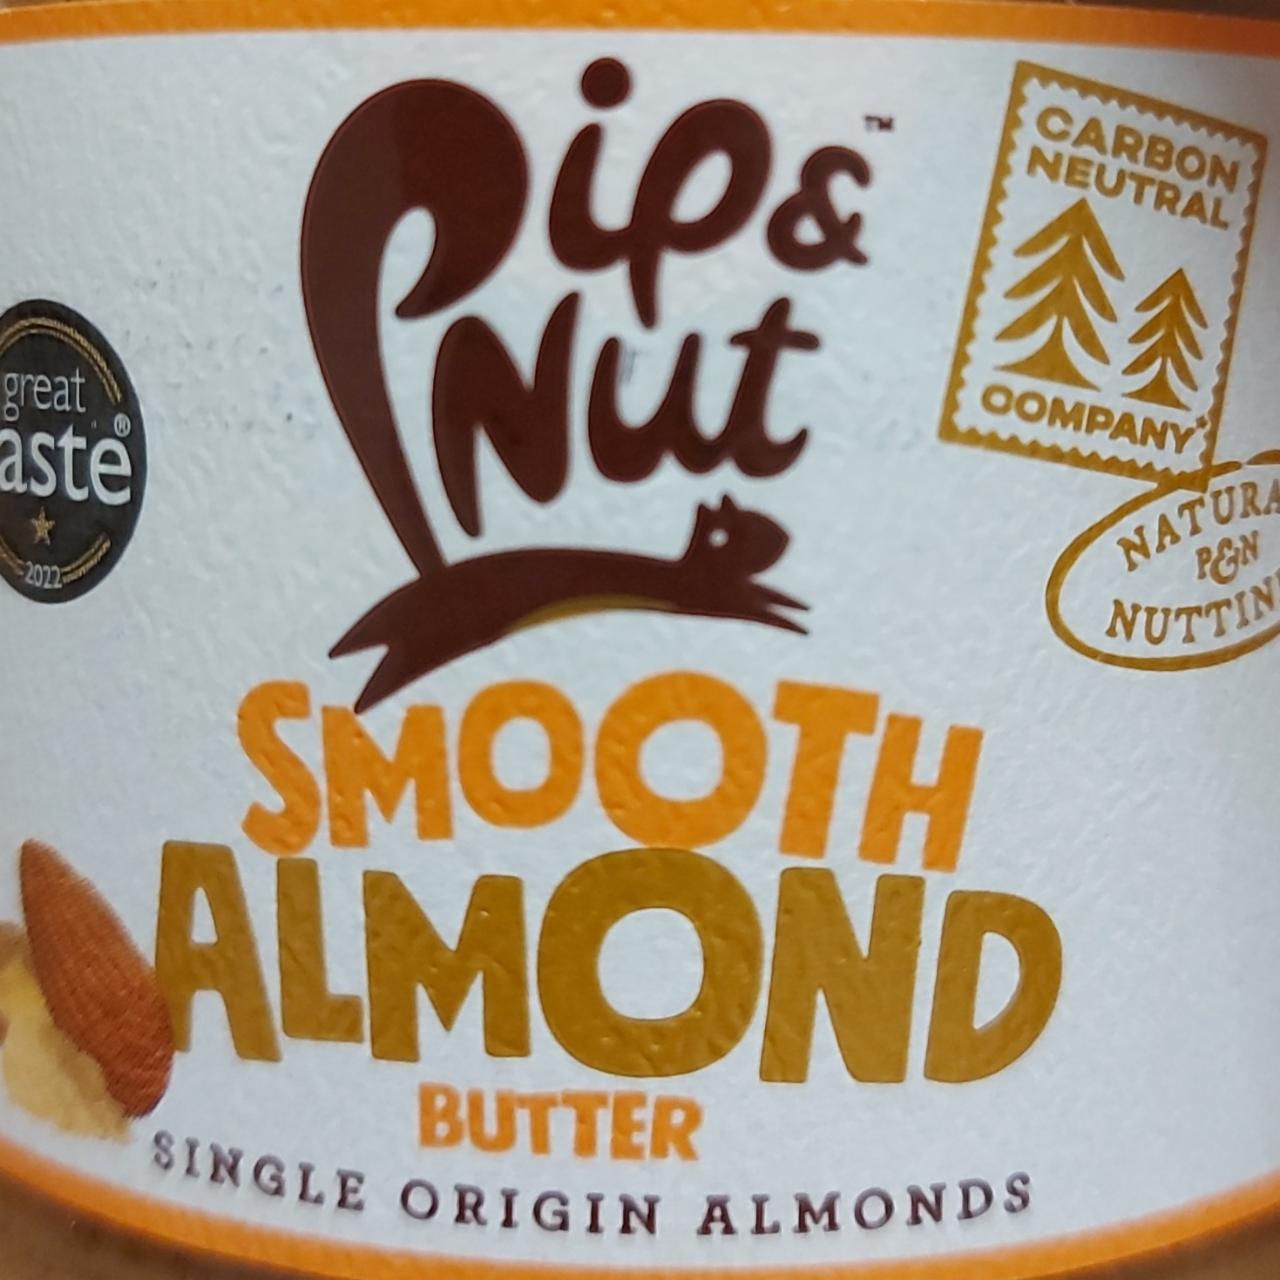 Képek - Smooth almond butter Pip & Nut